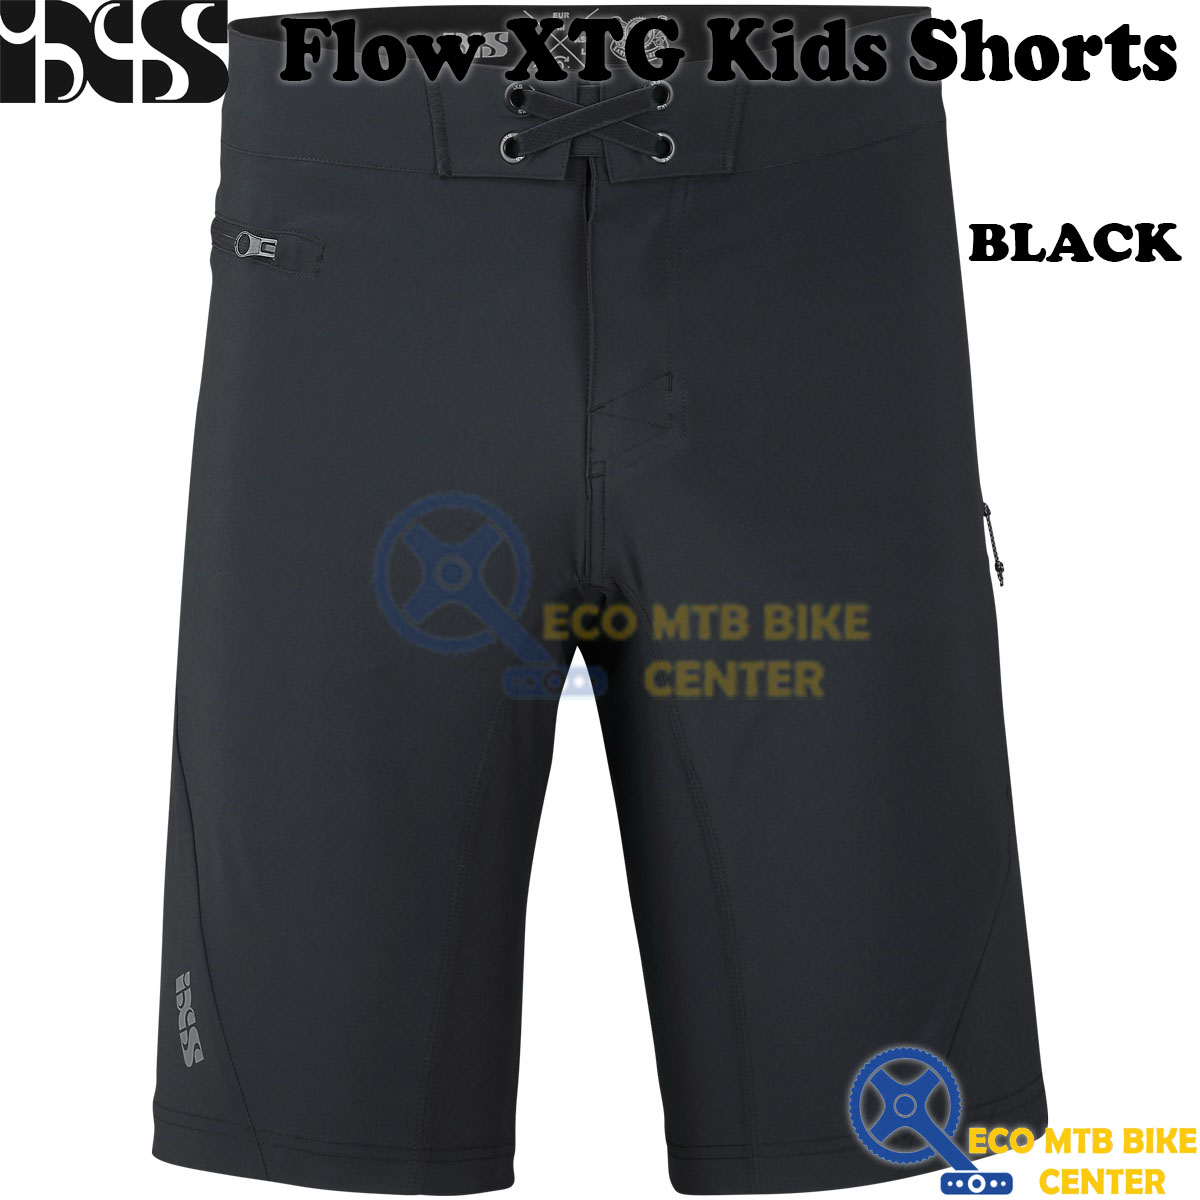 IXS Pant Flow XTG Kids Shorts